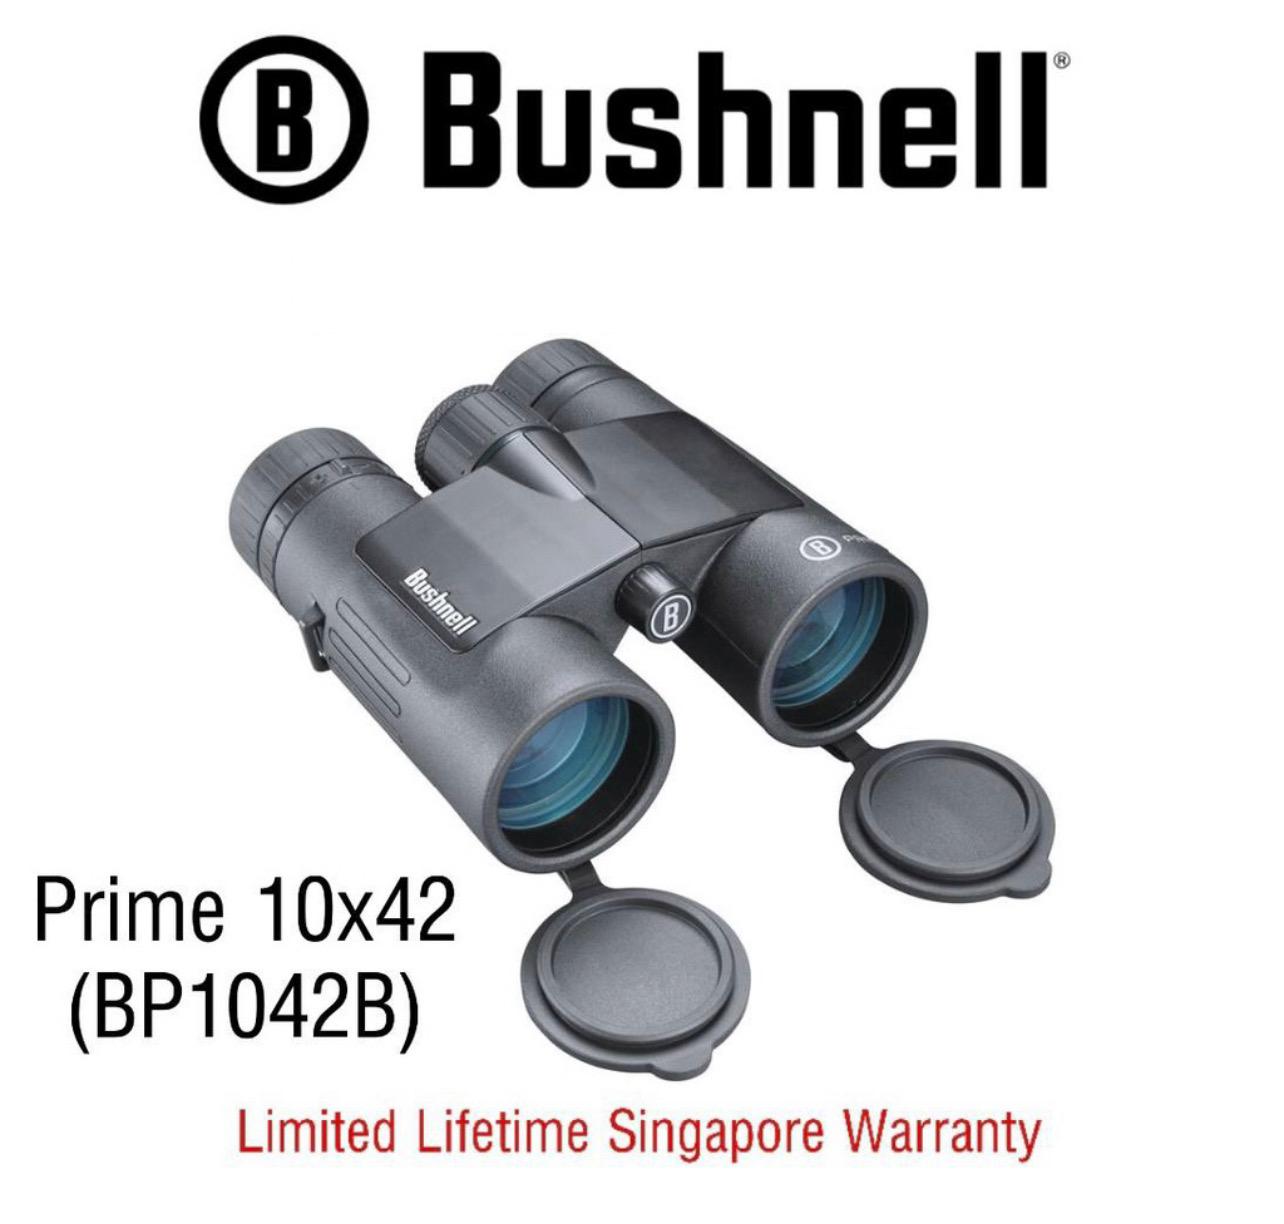 Bushnell Binoculars Prime 10x42 (BP1042B) - Limited Lifetime Warranty